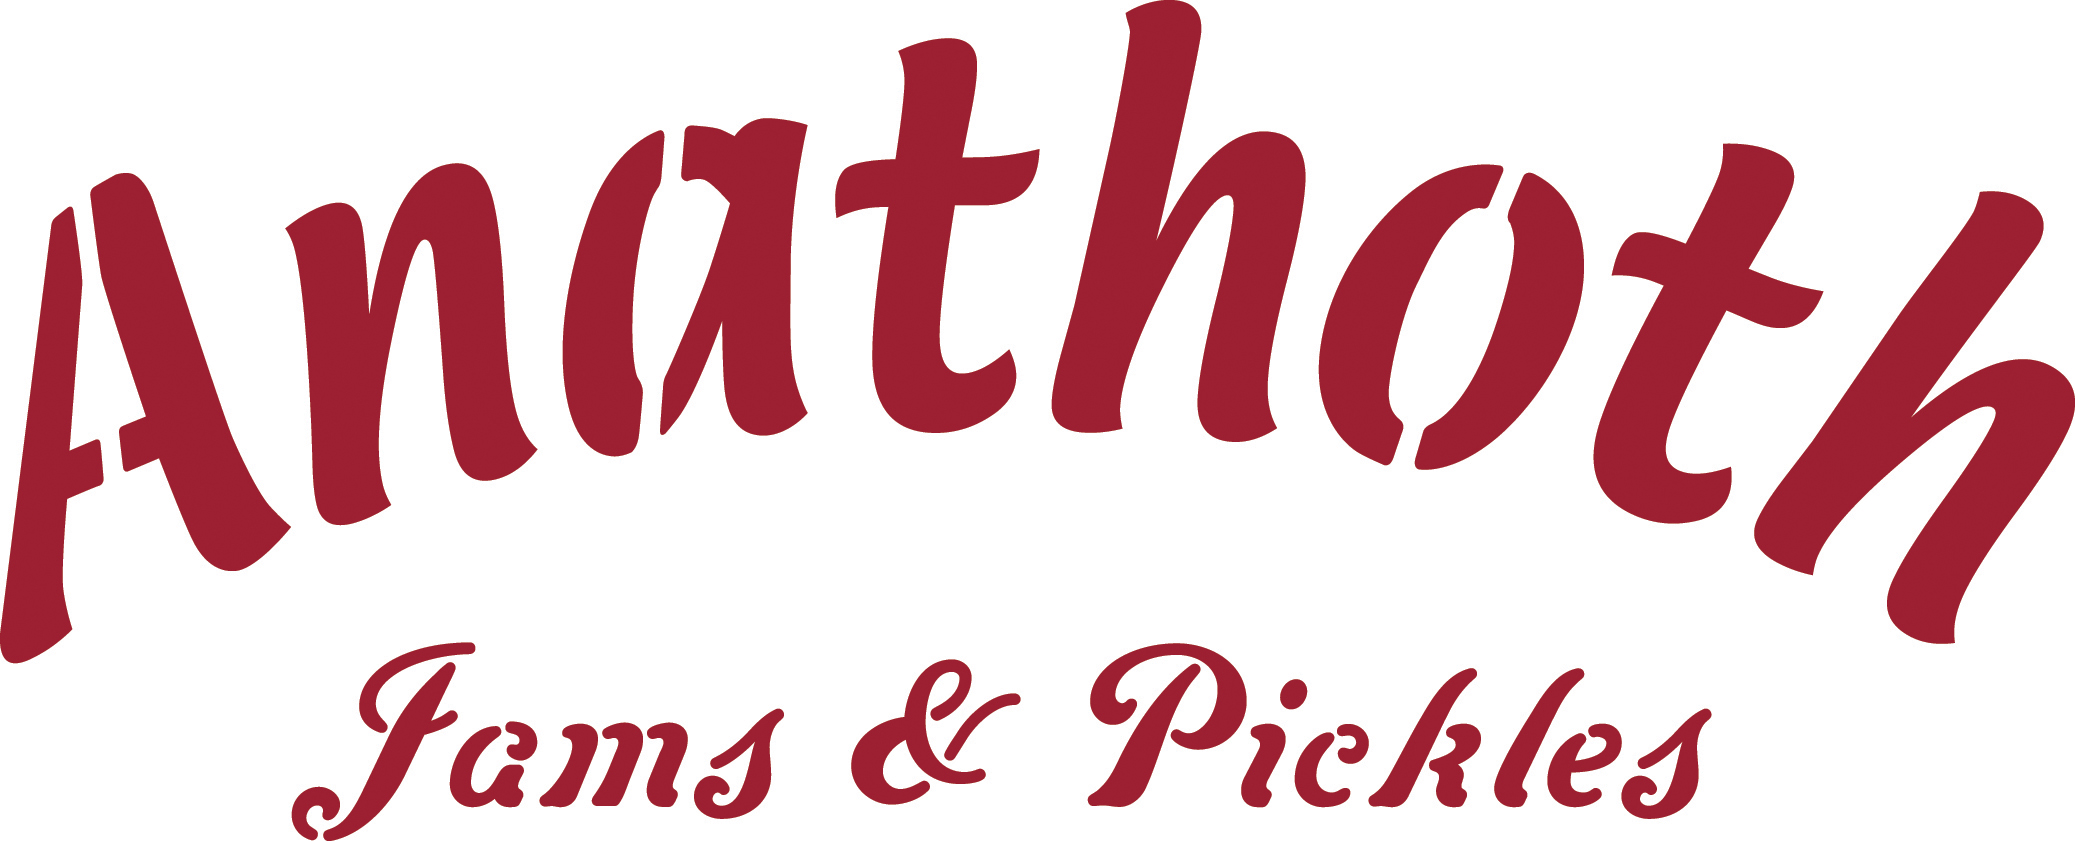 Anathoth logo